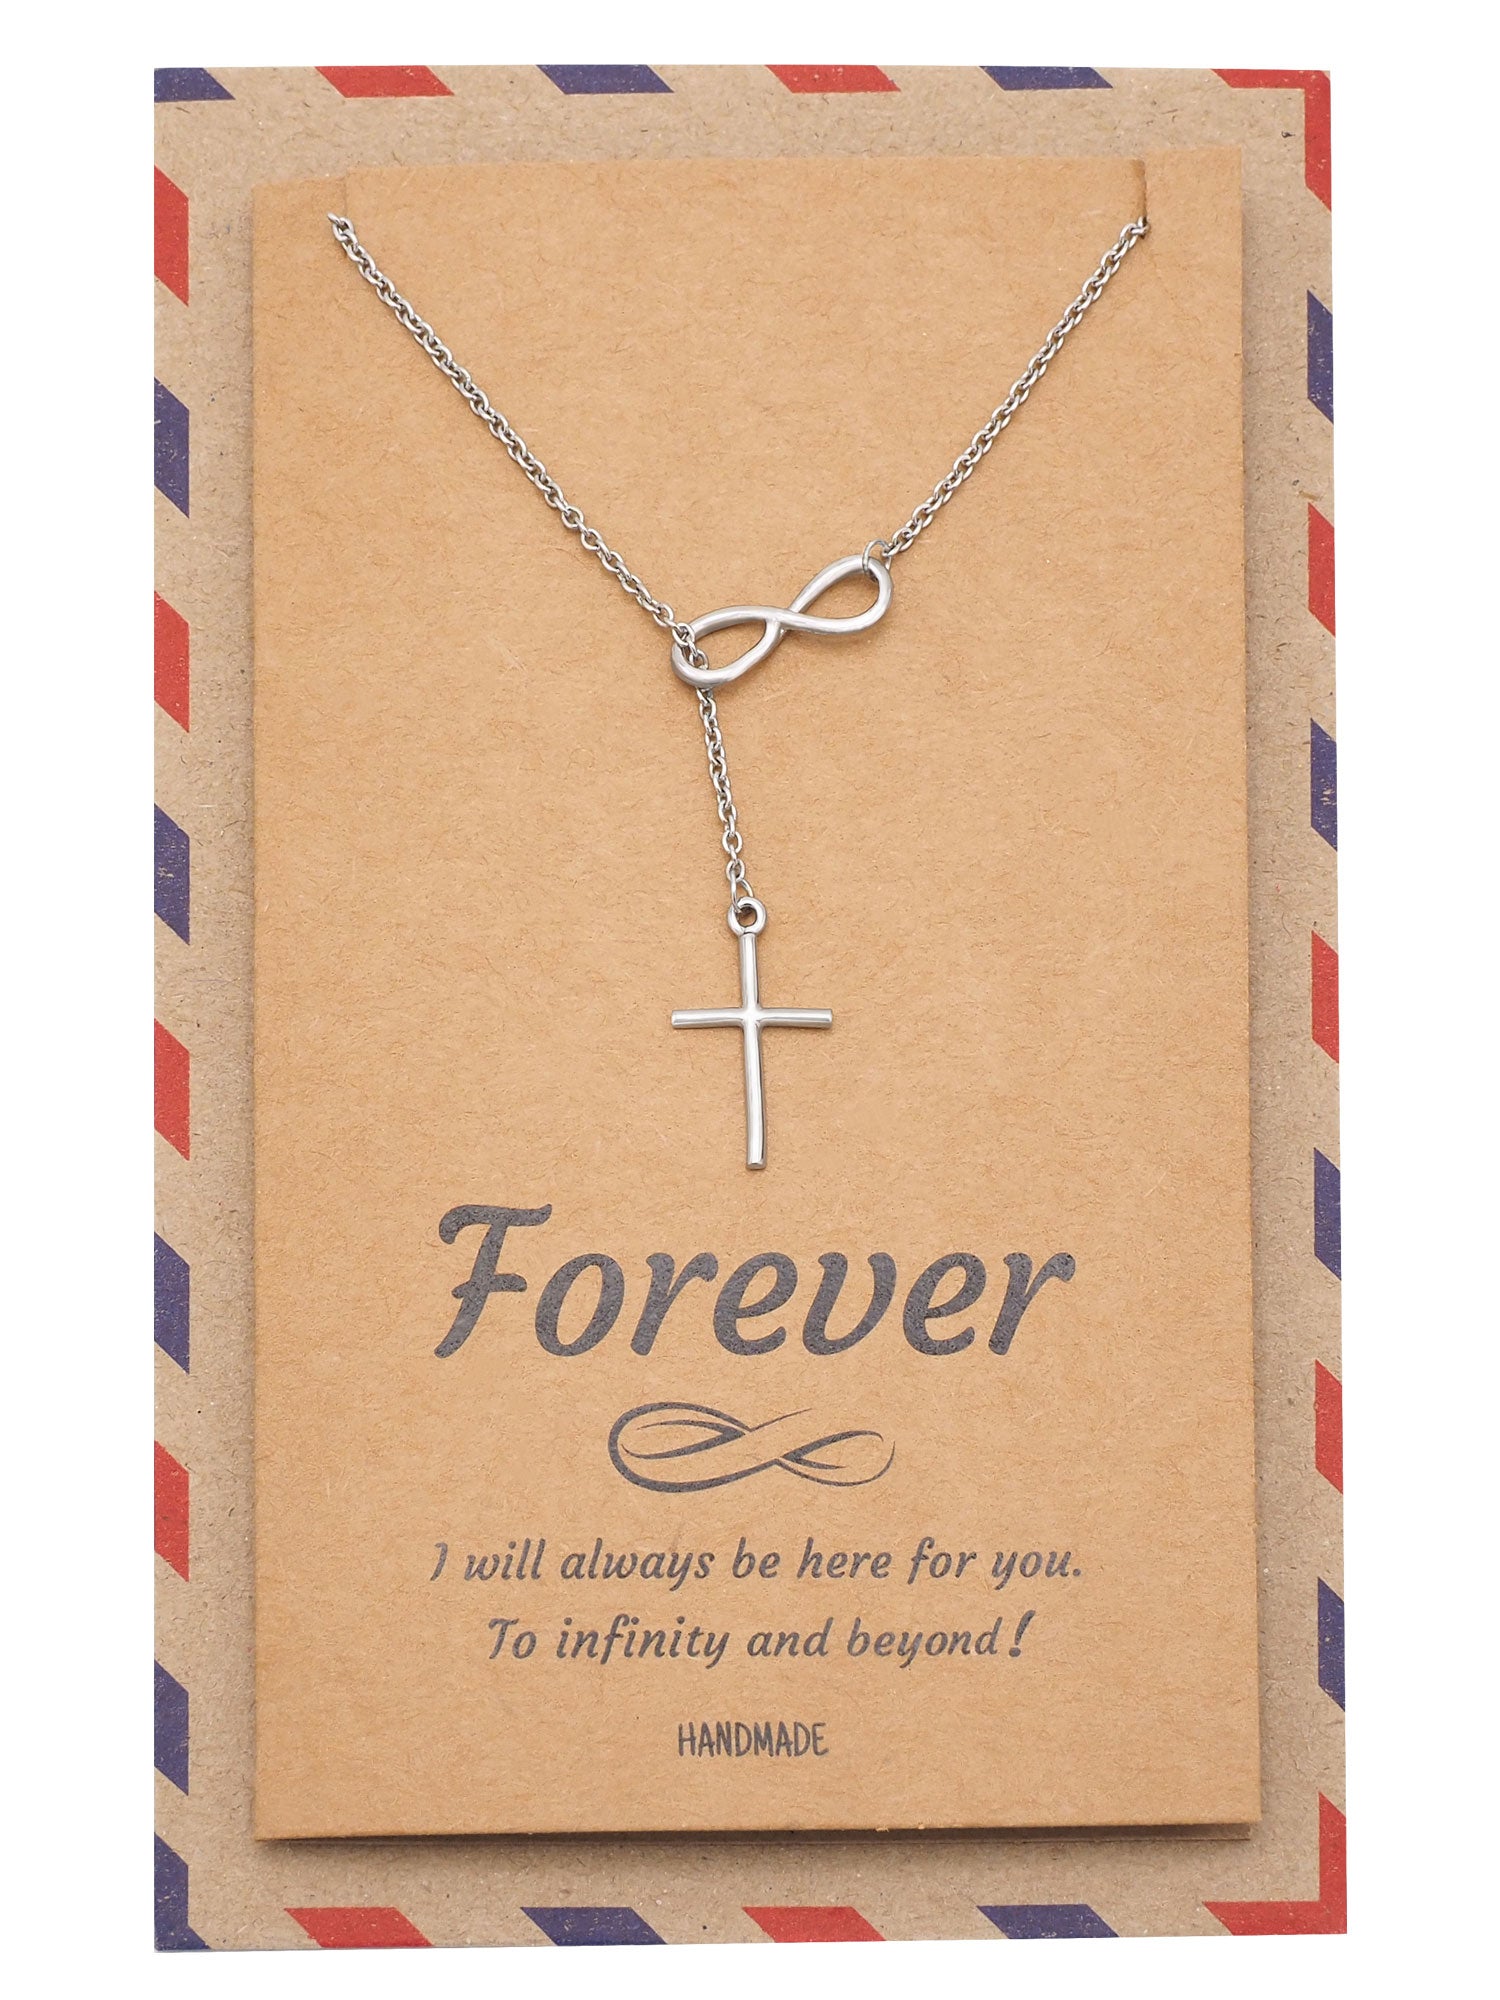 Christ Infinity Cross Necklace